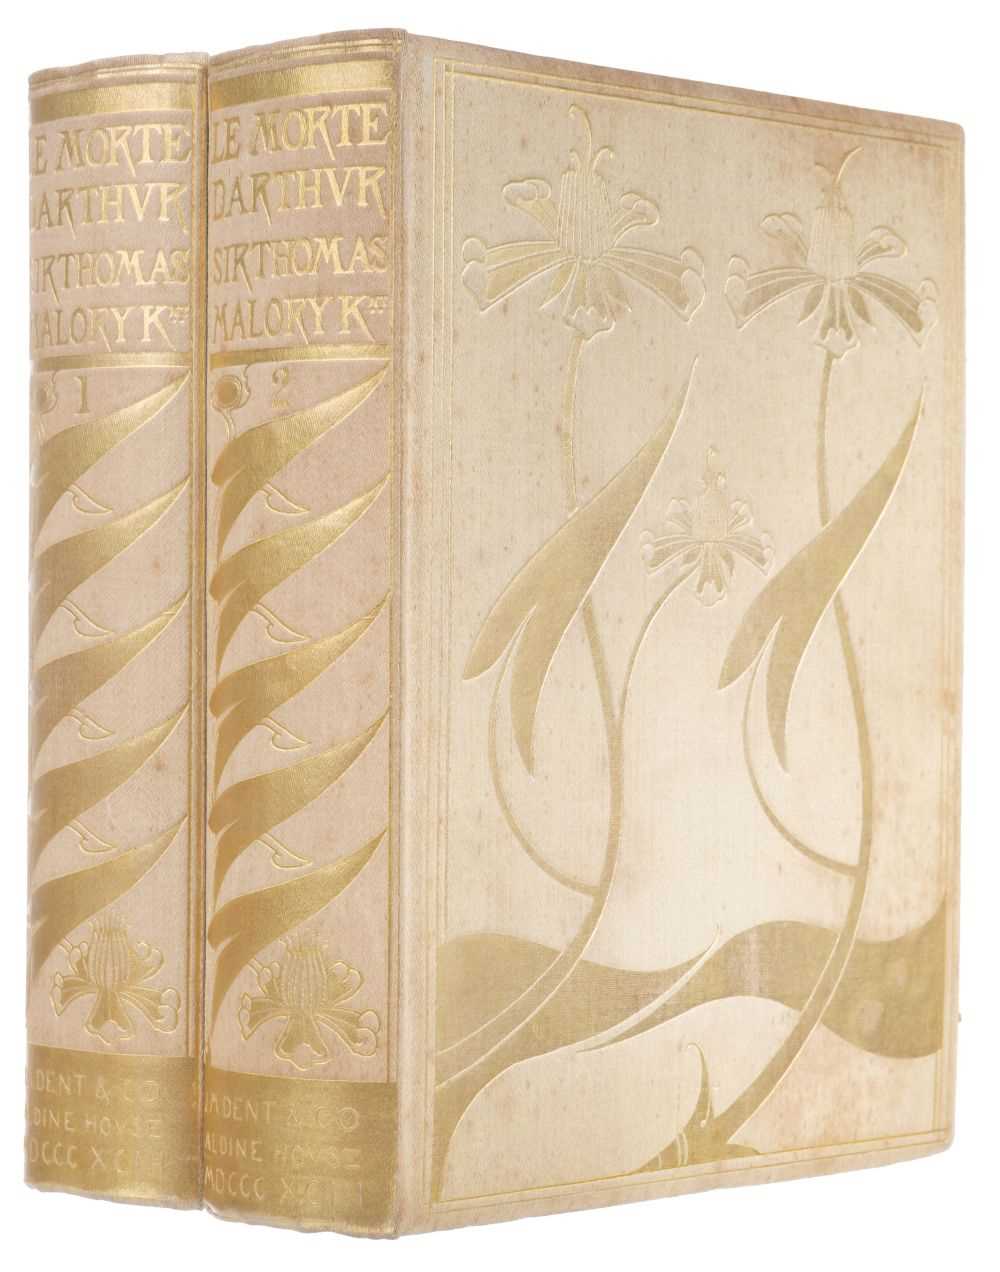 Lot 818 - Beardsley (Aubrey, illustrator). The Birth Life and Acts of King Arthur, 2 volumes, 1893-94